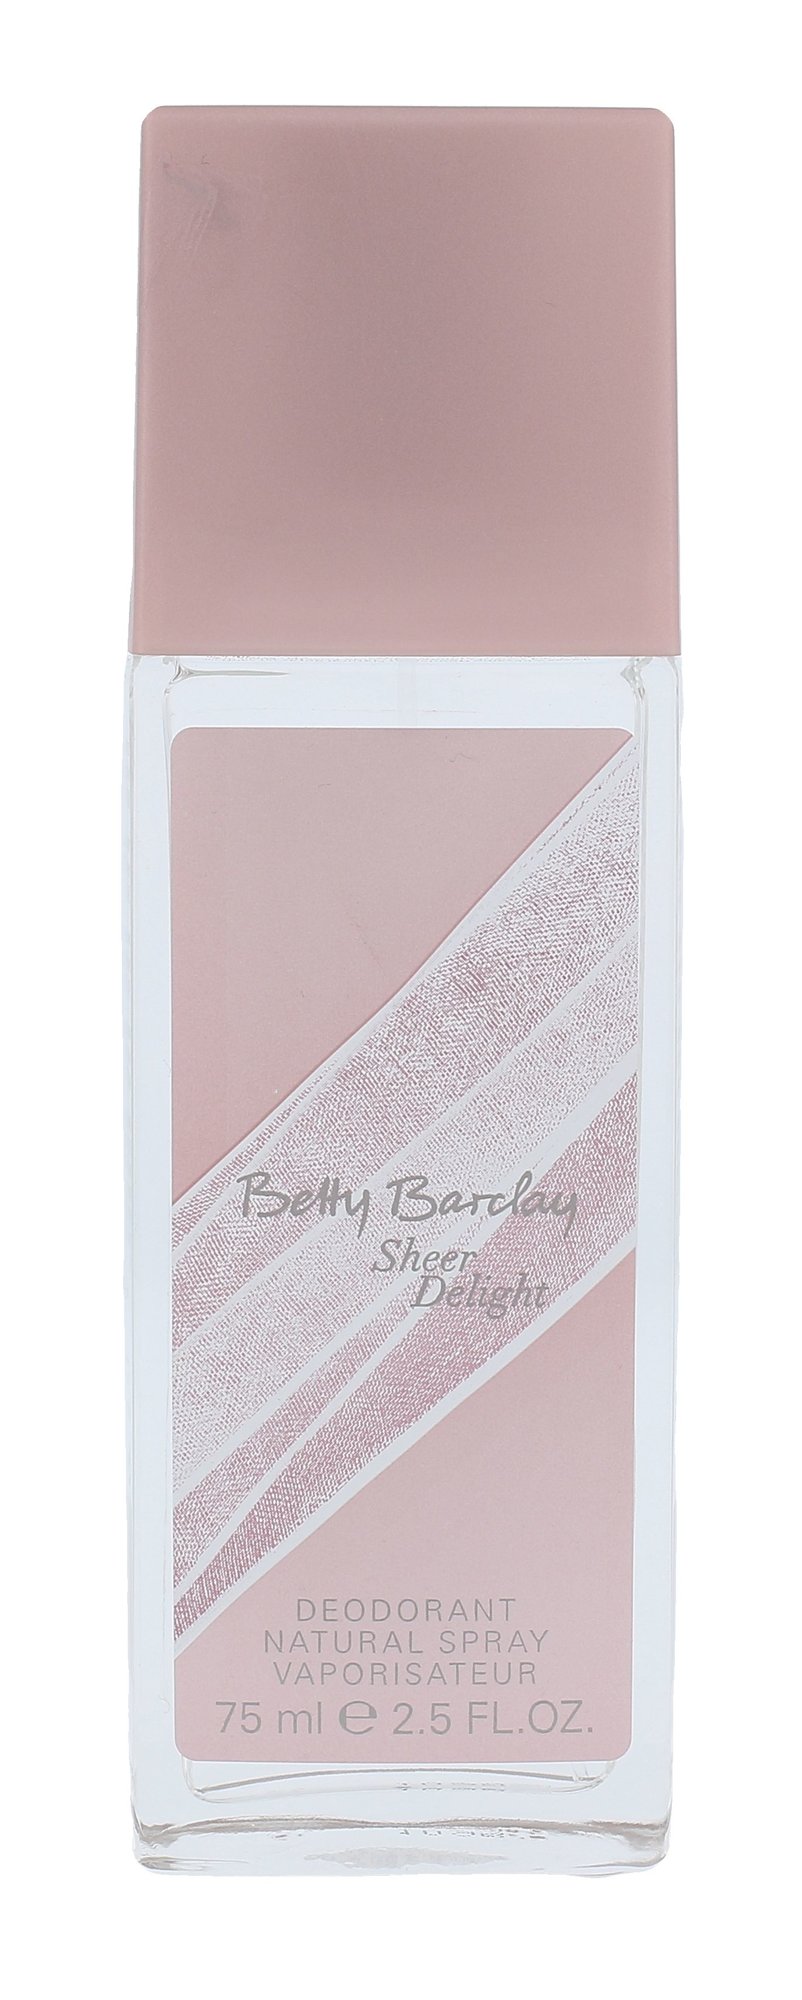 Betty Barclay Sheer Delight 75ml dezodorantas